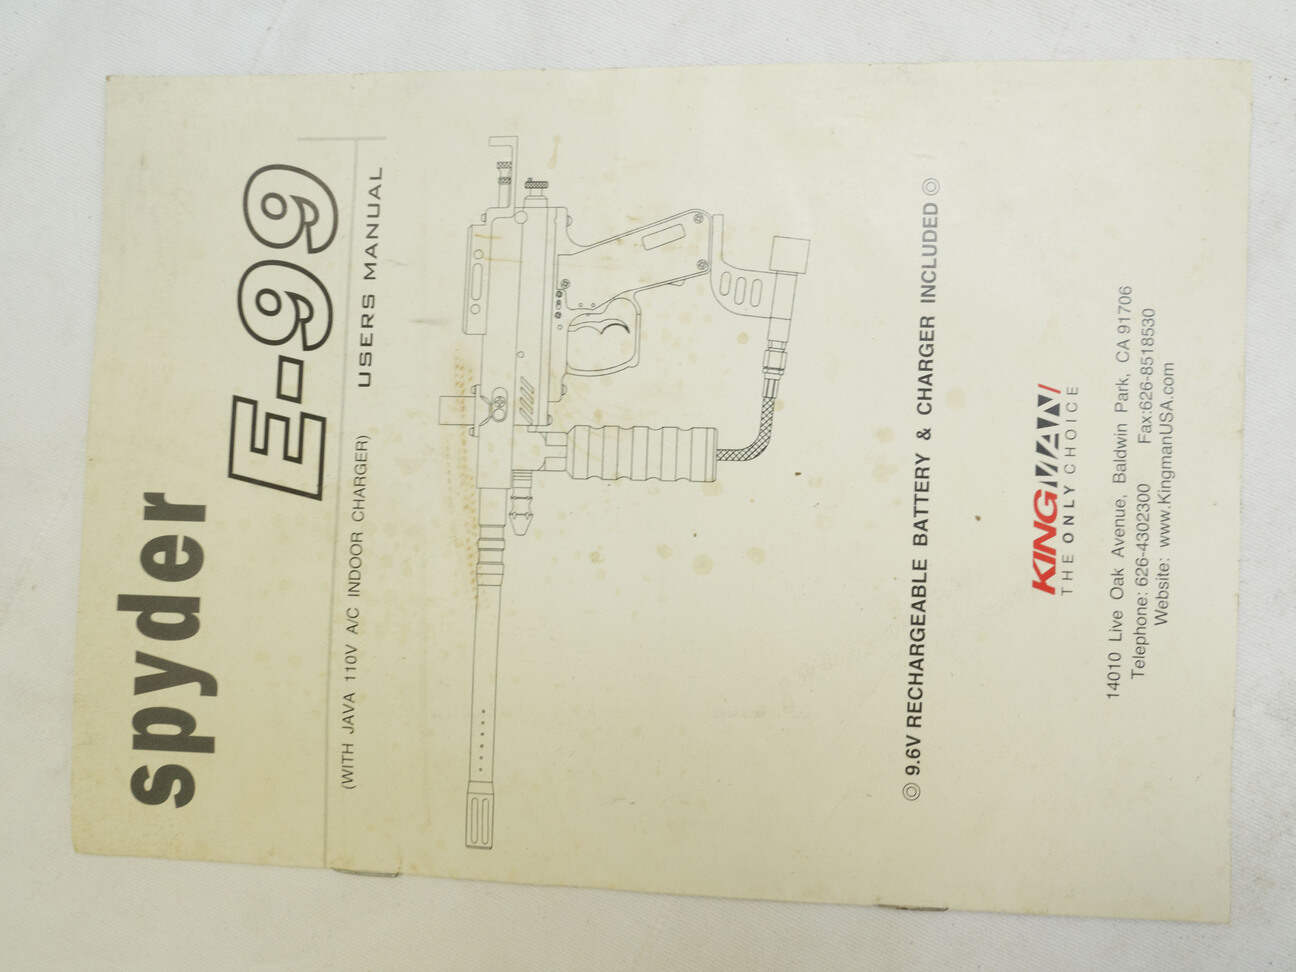 Kingman Spyder E-99 manual, used shape